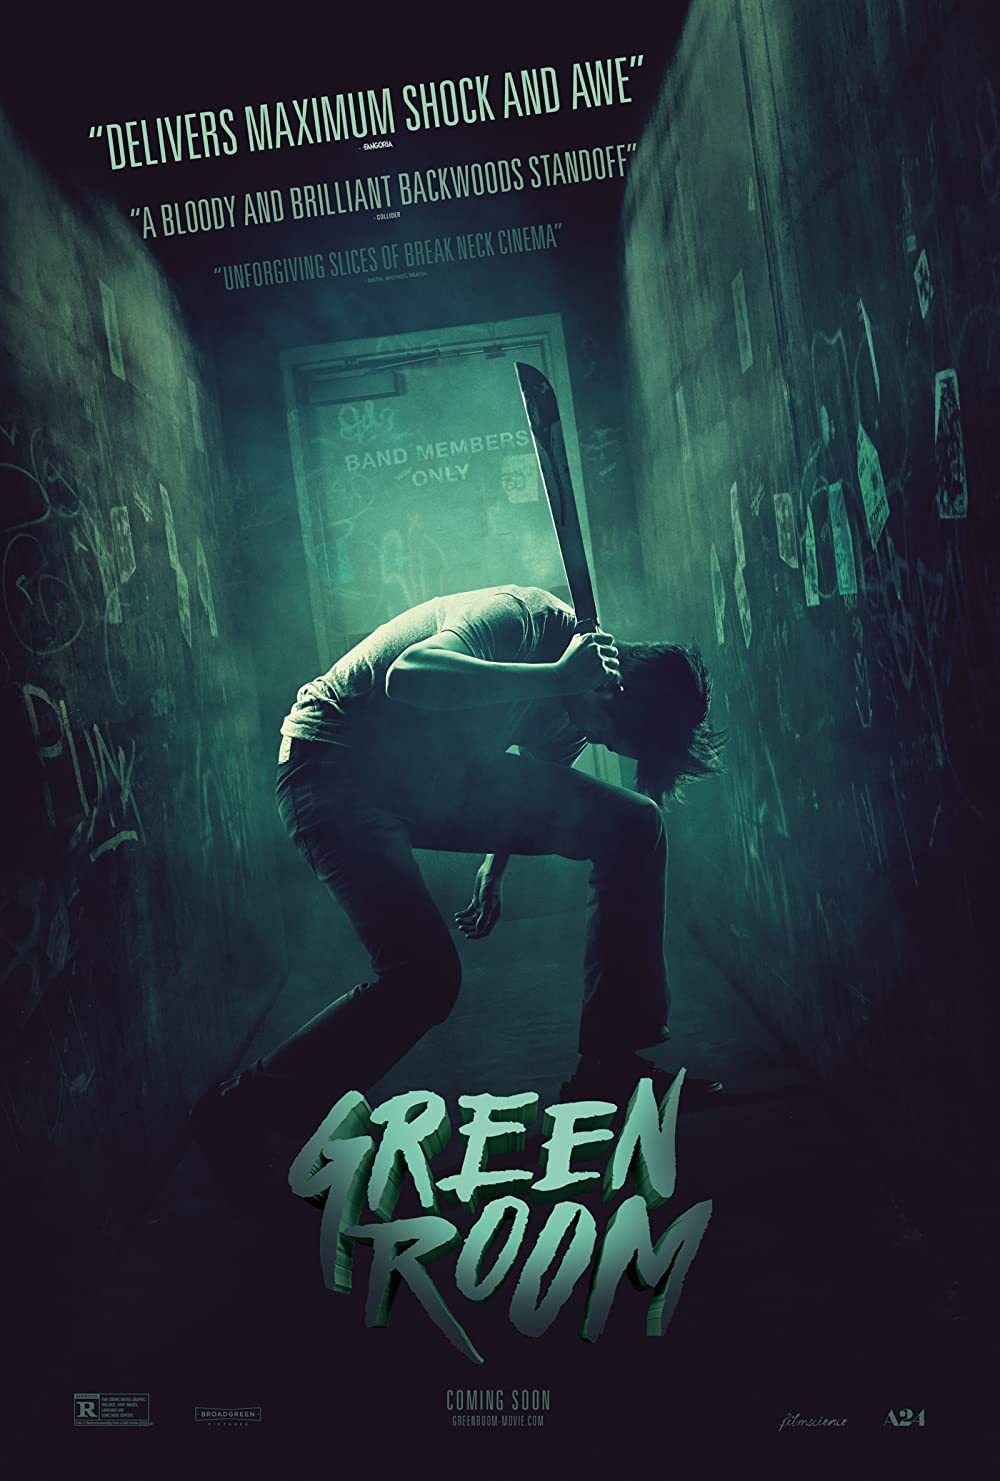 Green Room ล็อค เชือด ร็อก (ห้ามกระตุก) (2015)